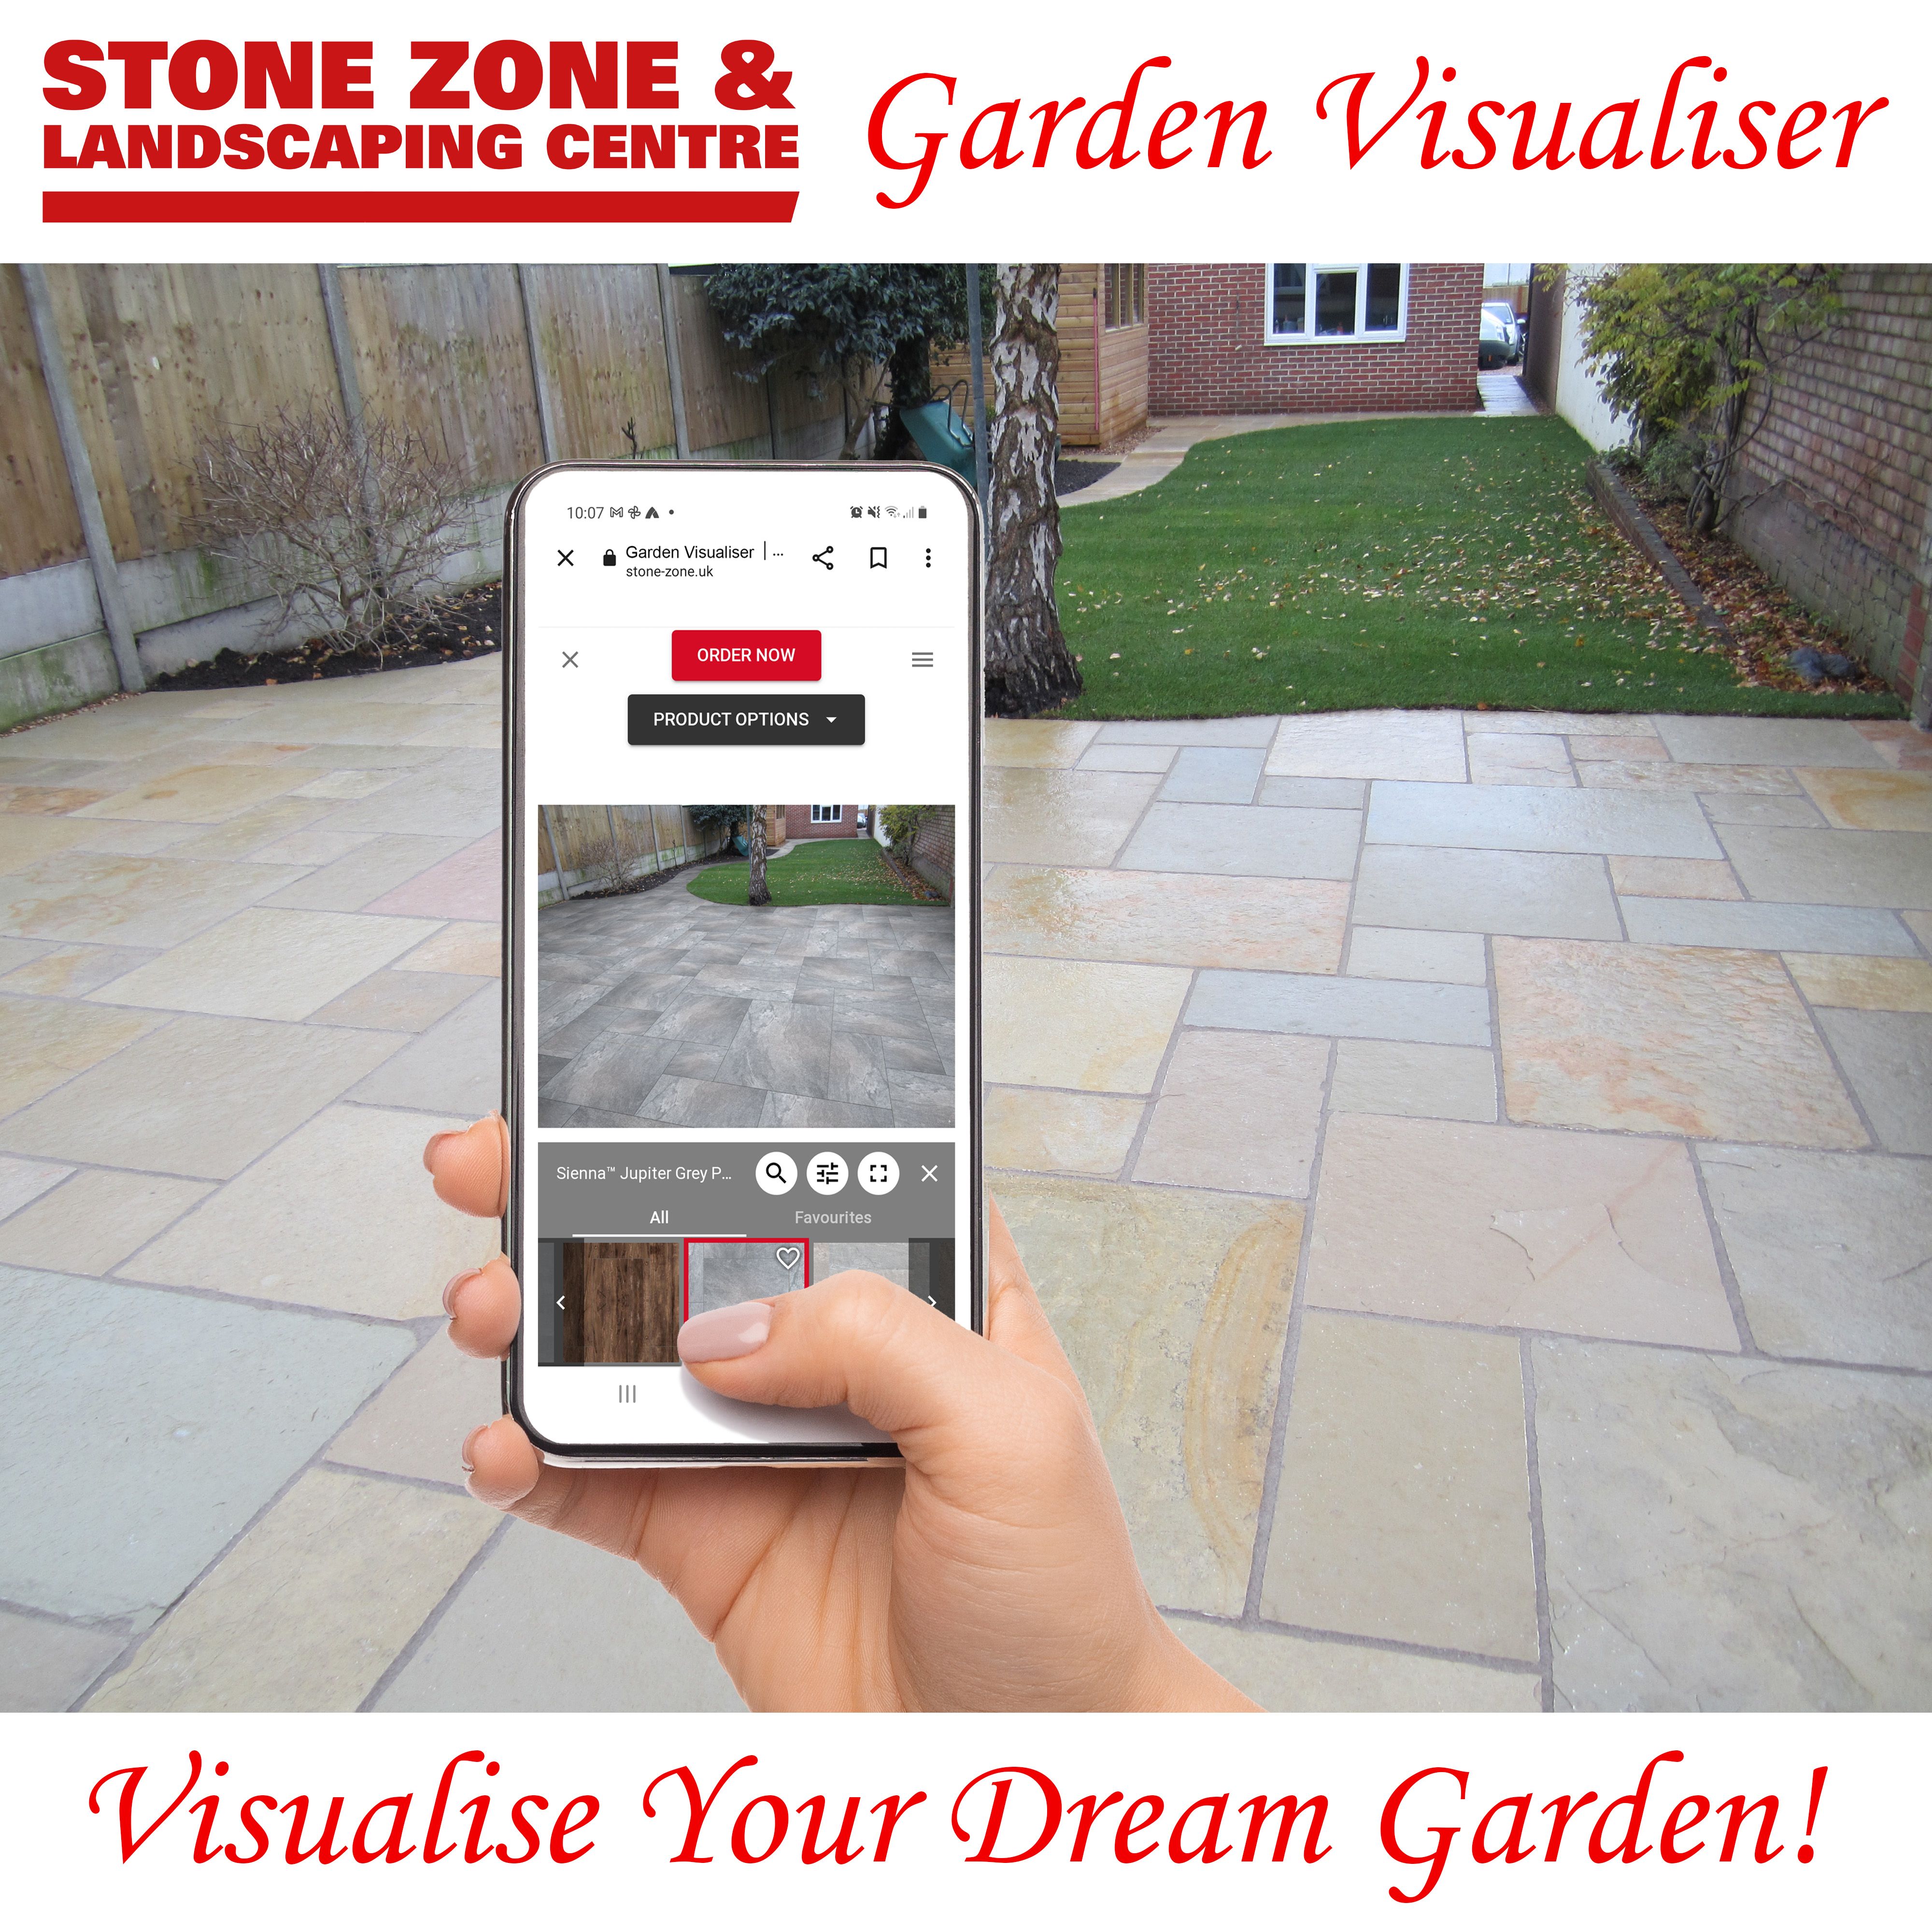 The Stone Zone Garden Visualiser